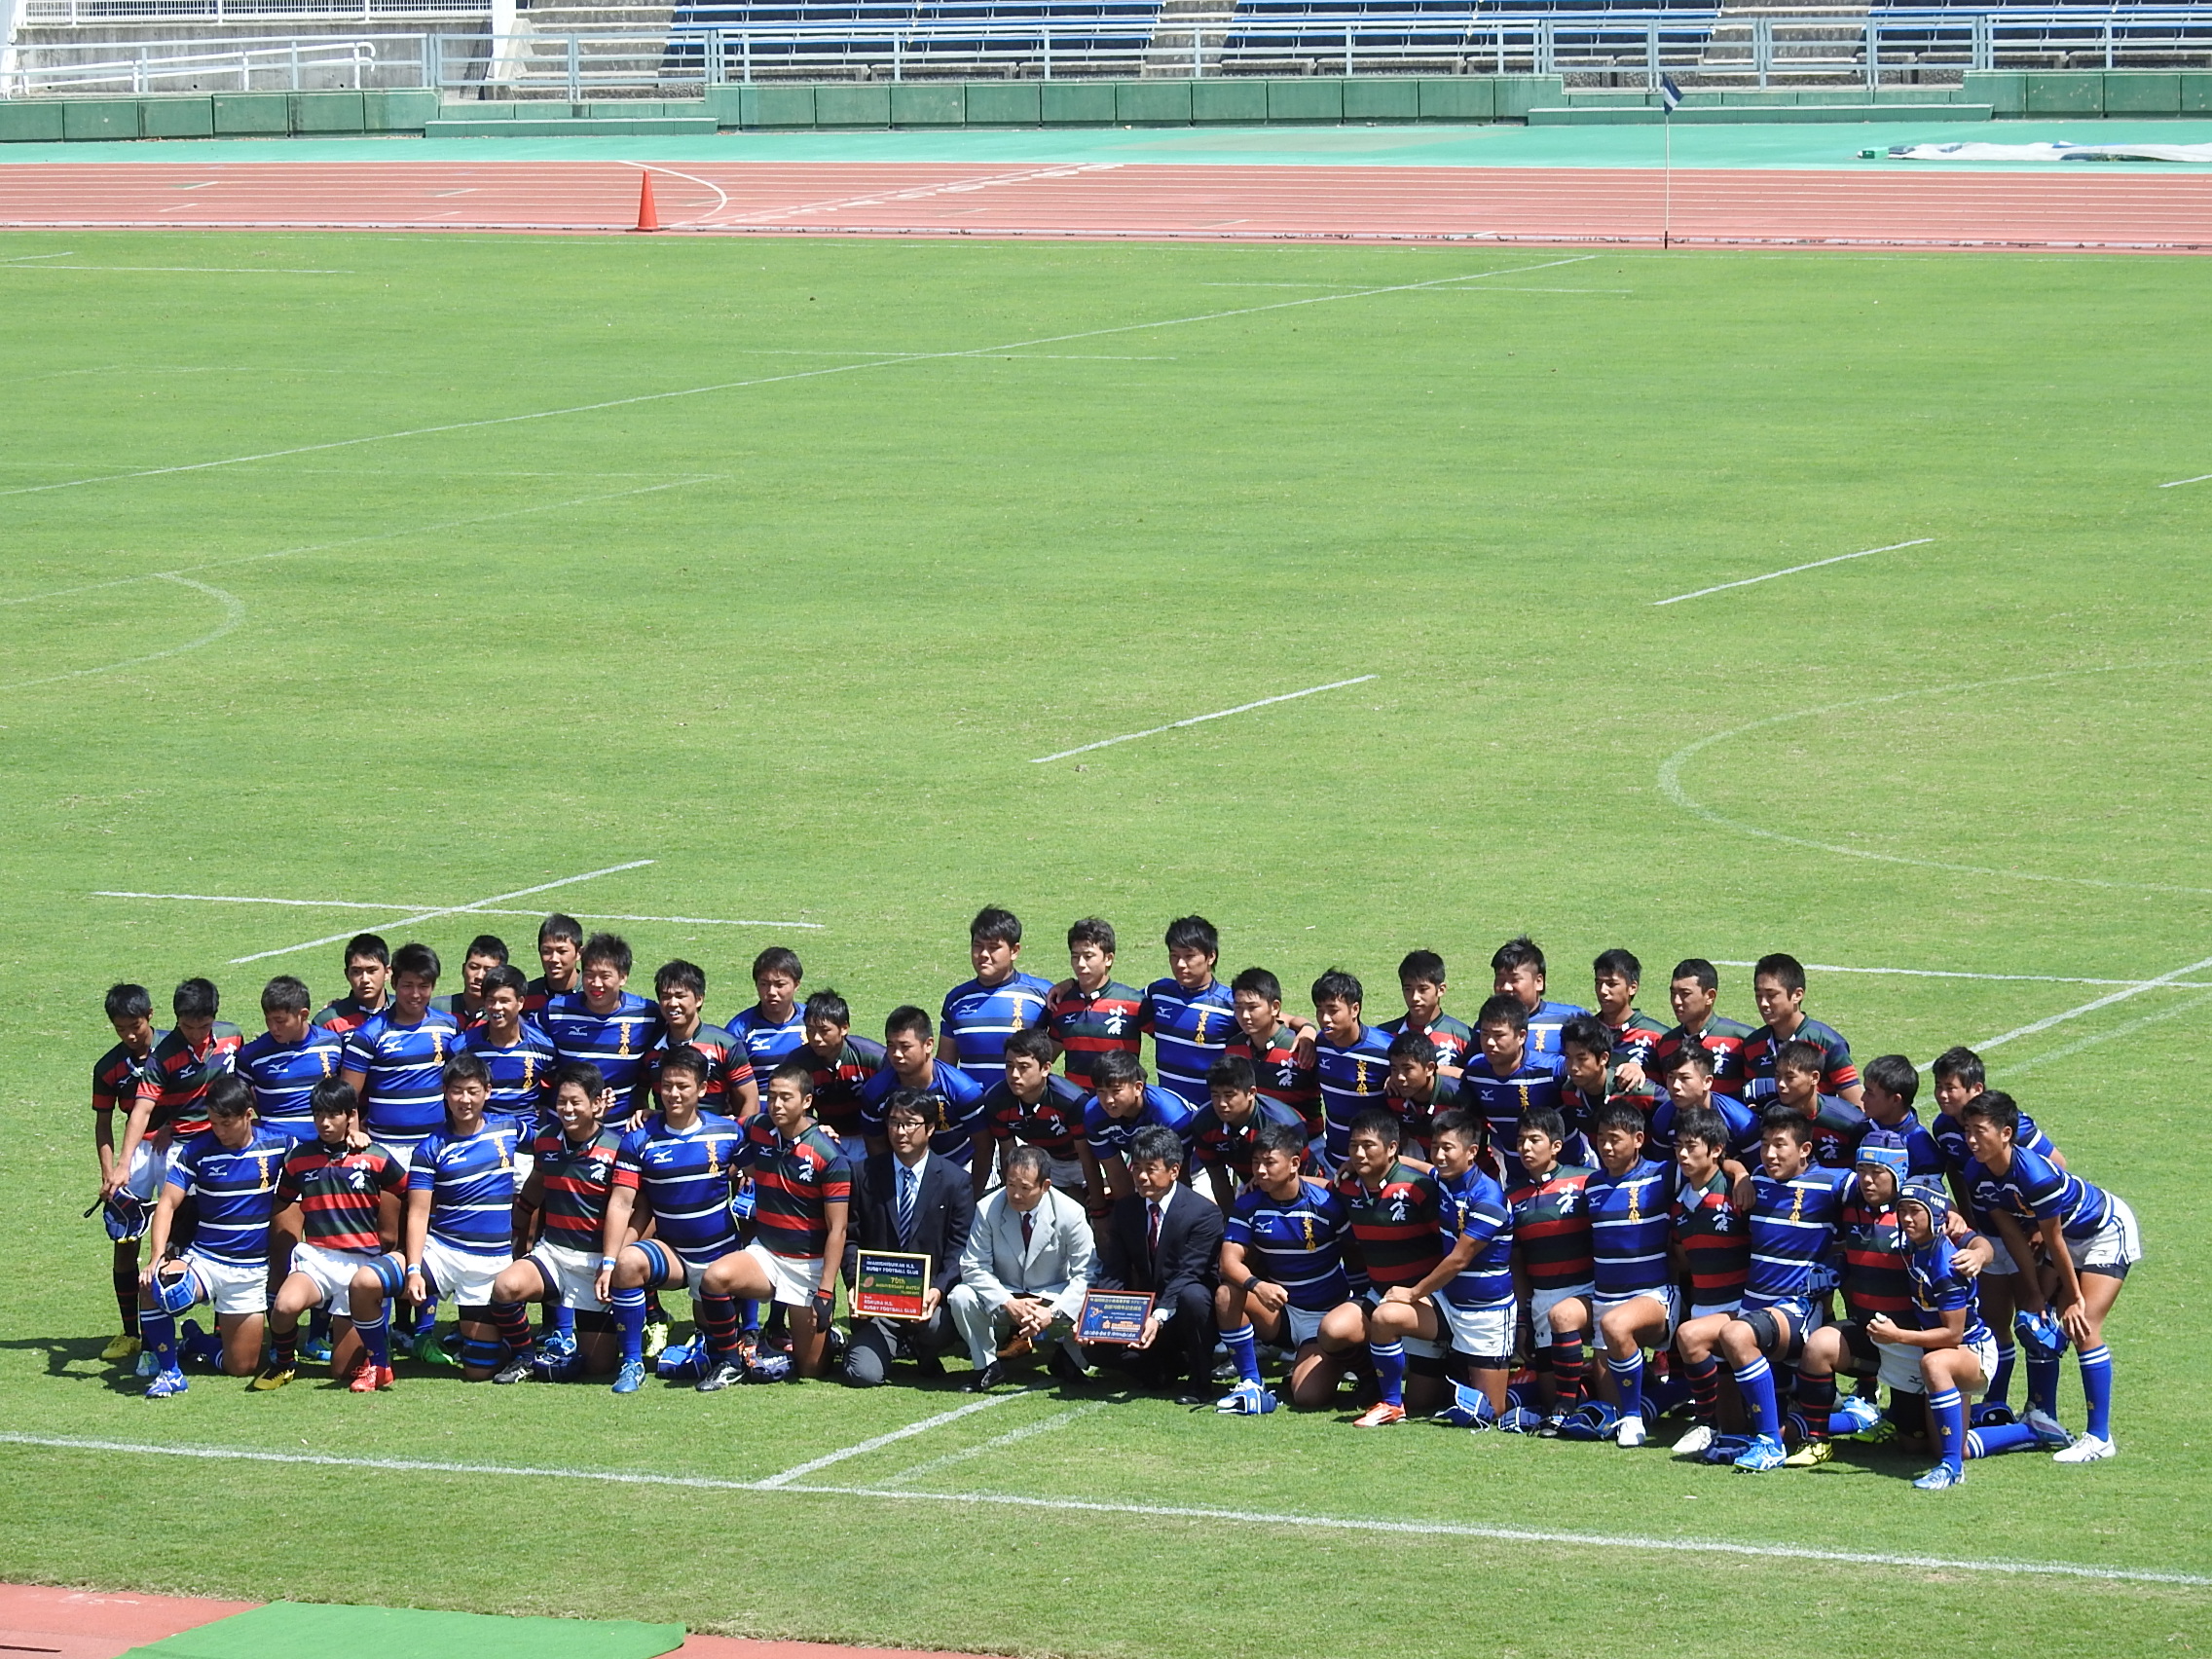 http://kokura-rugby.sakura.ne.jp/DSCN7201.JPG